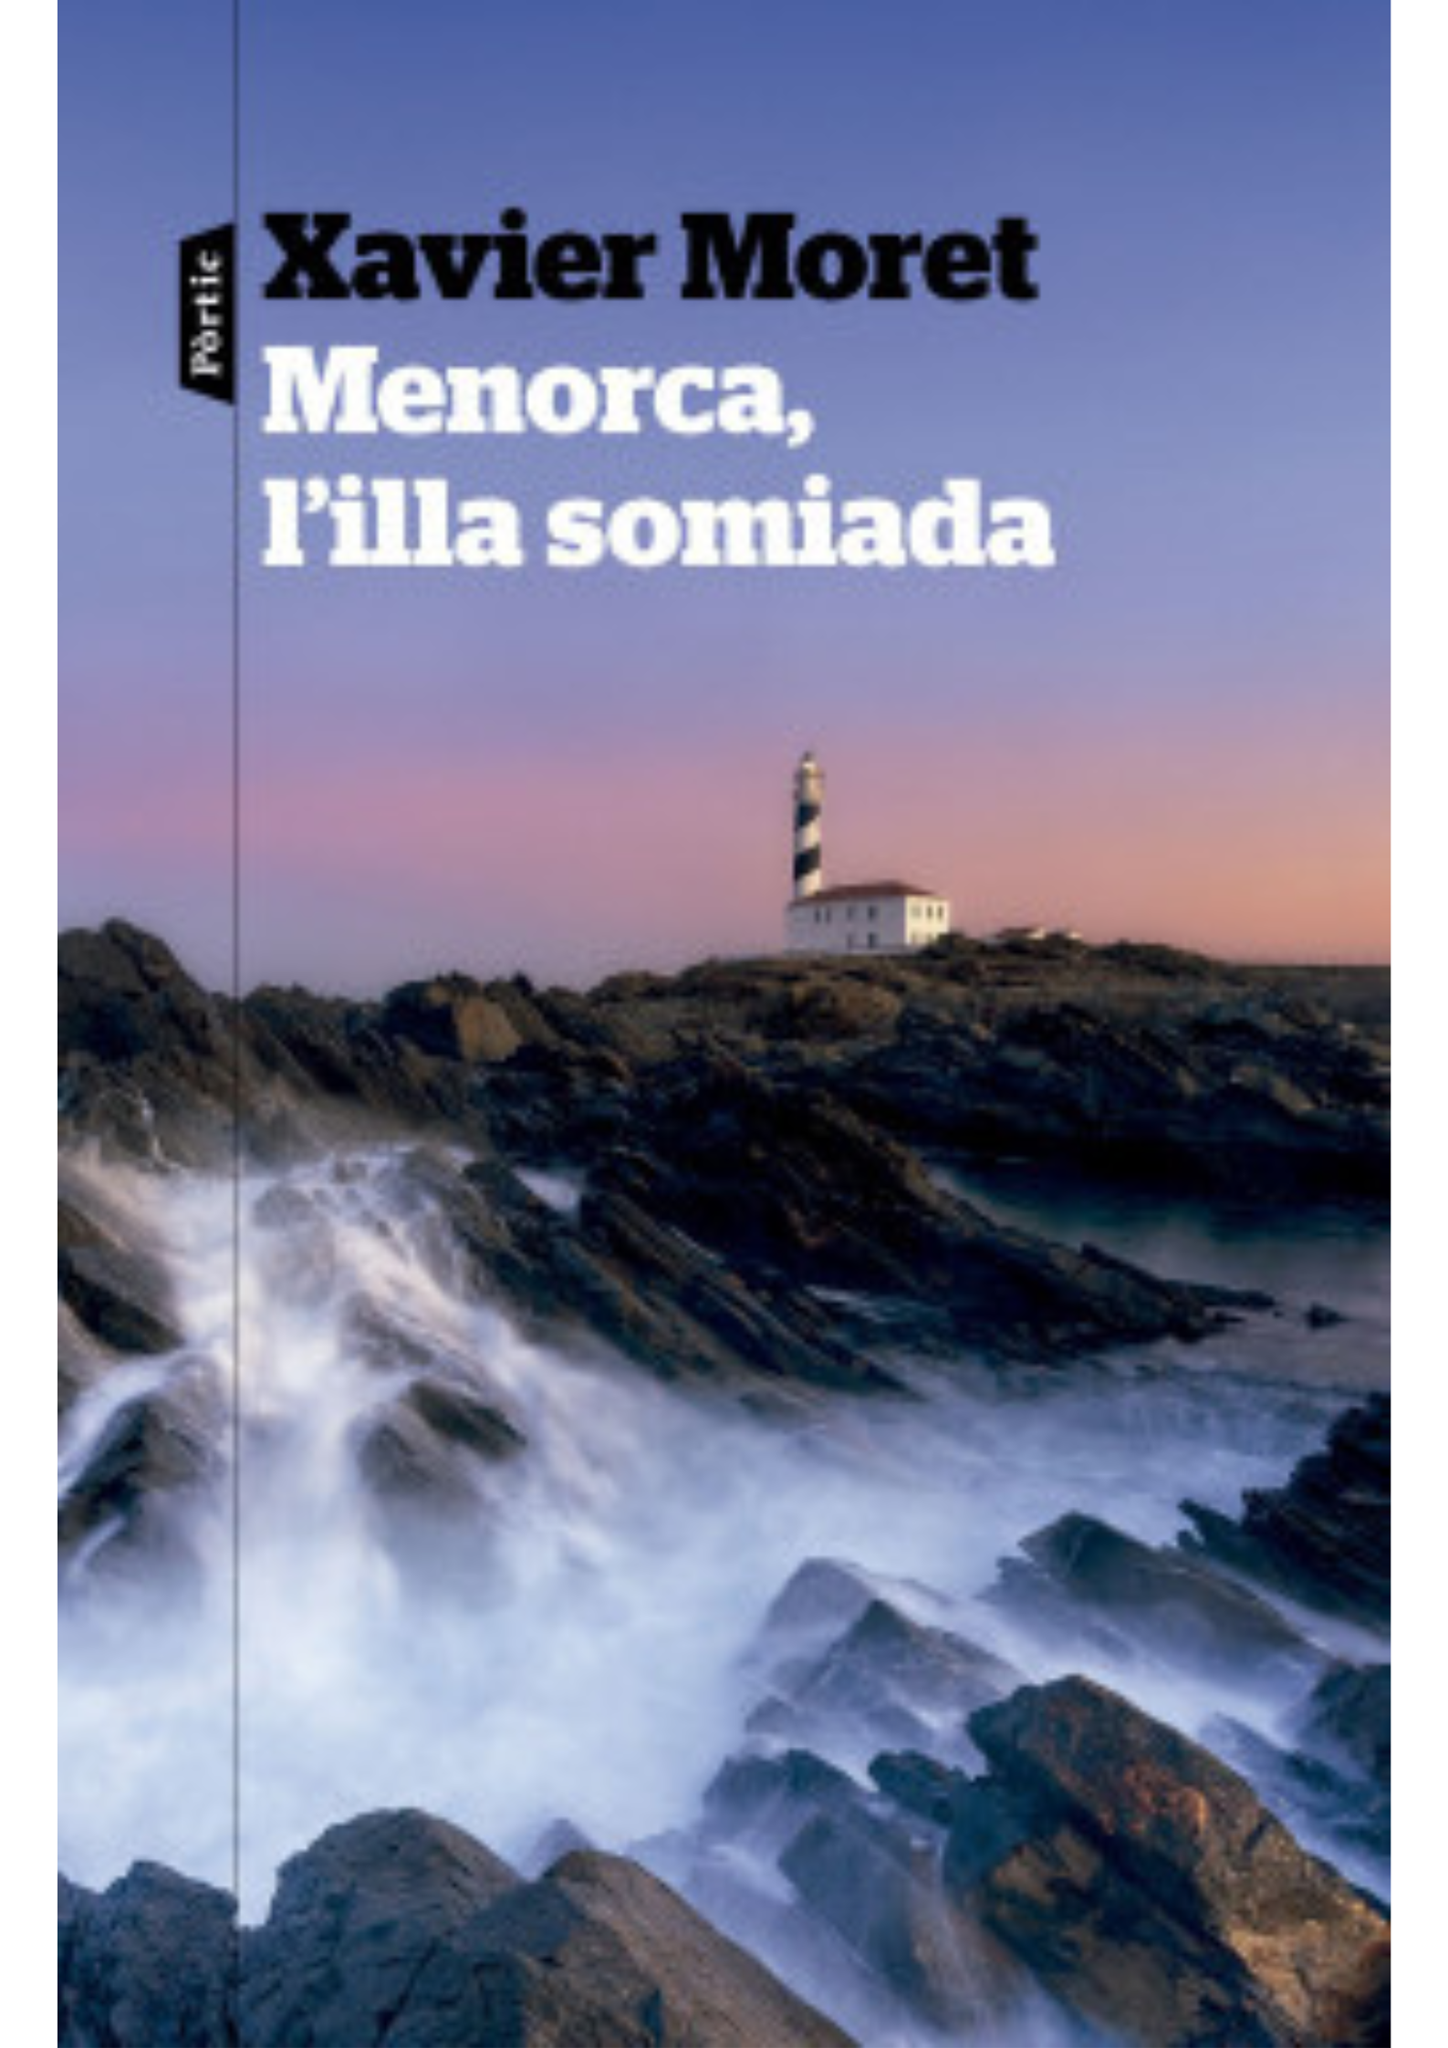  6. Menorca, l’illa somiada de Xavier Moret